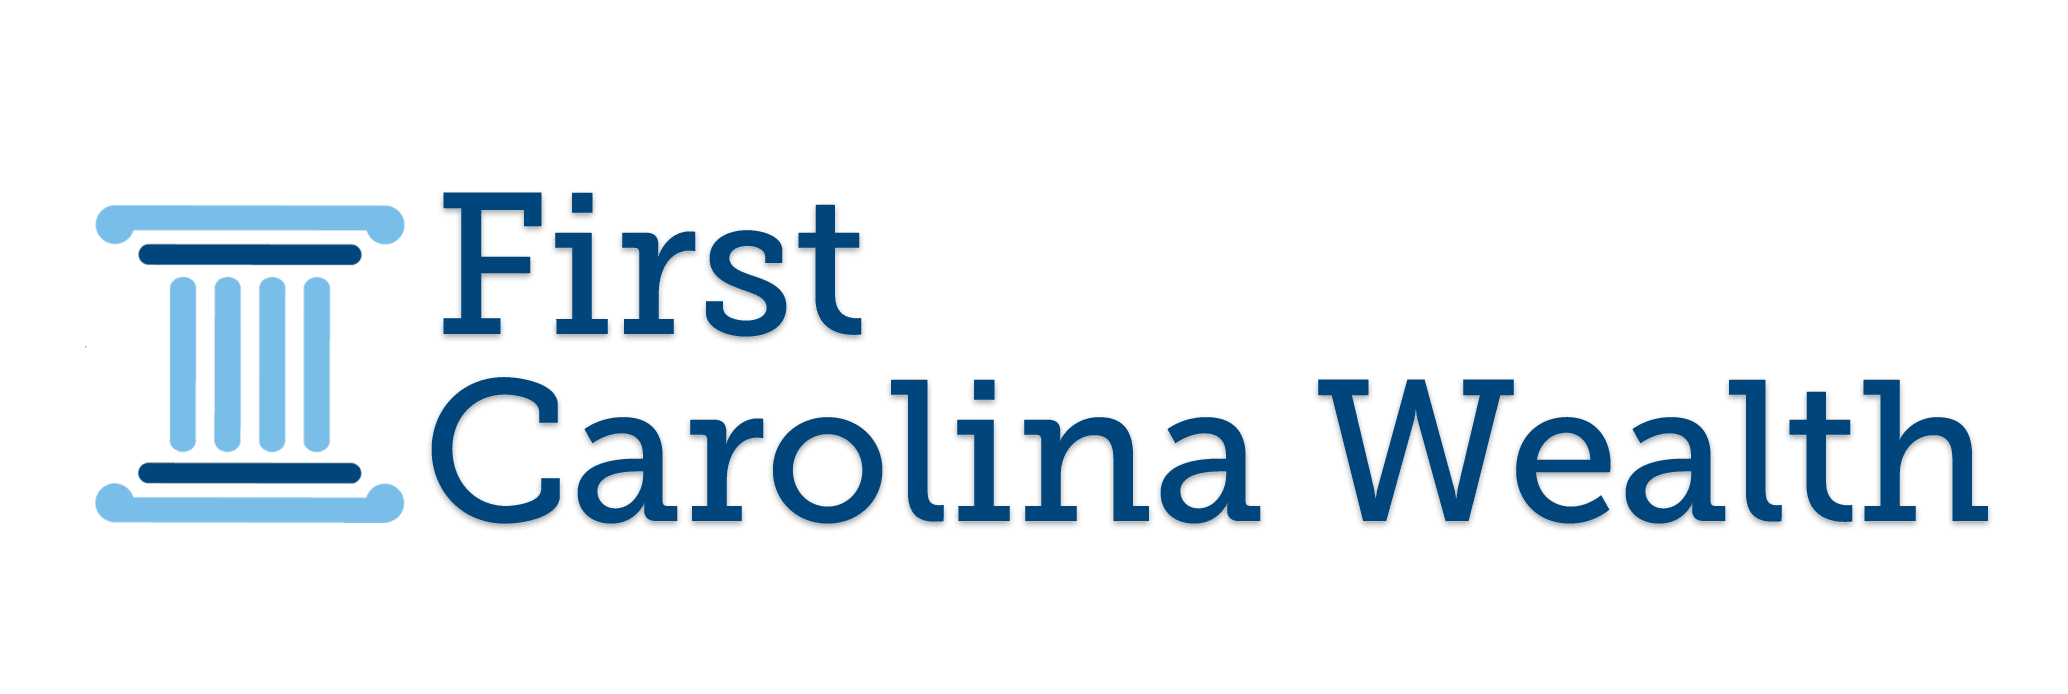 First Carolina Wealth